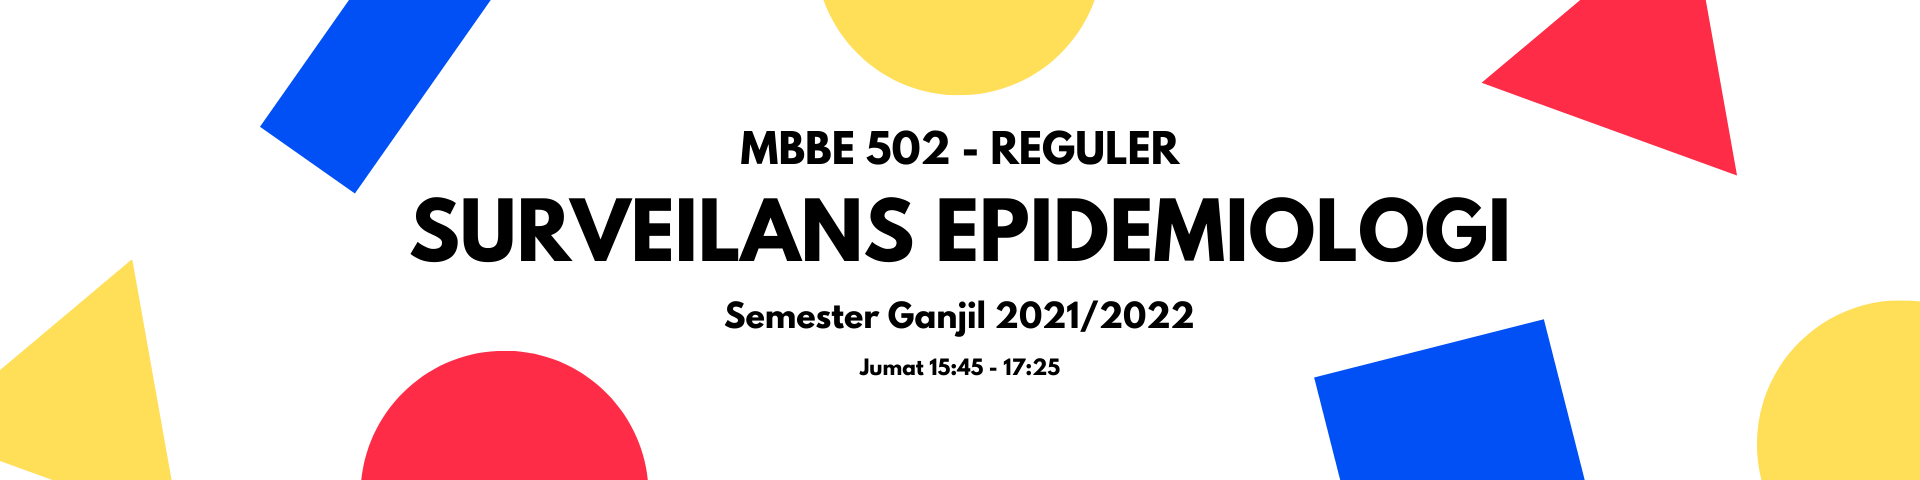 MBBE 502 Surveilans Epidemiologi